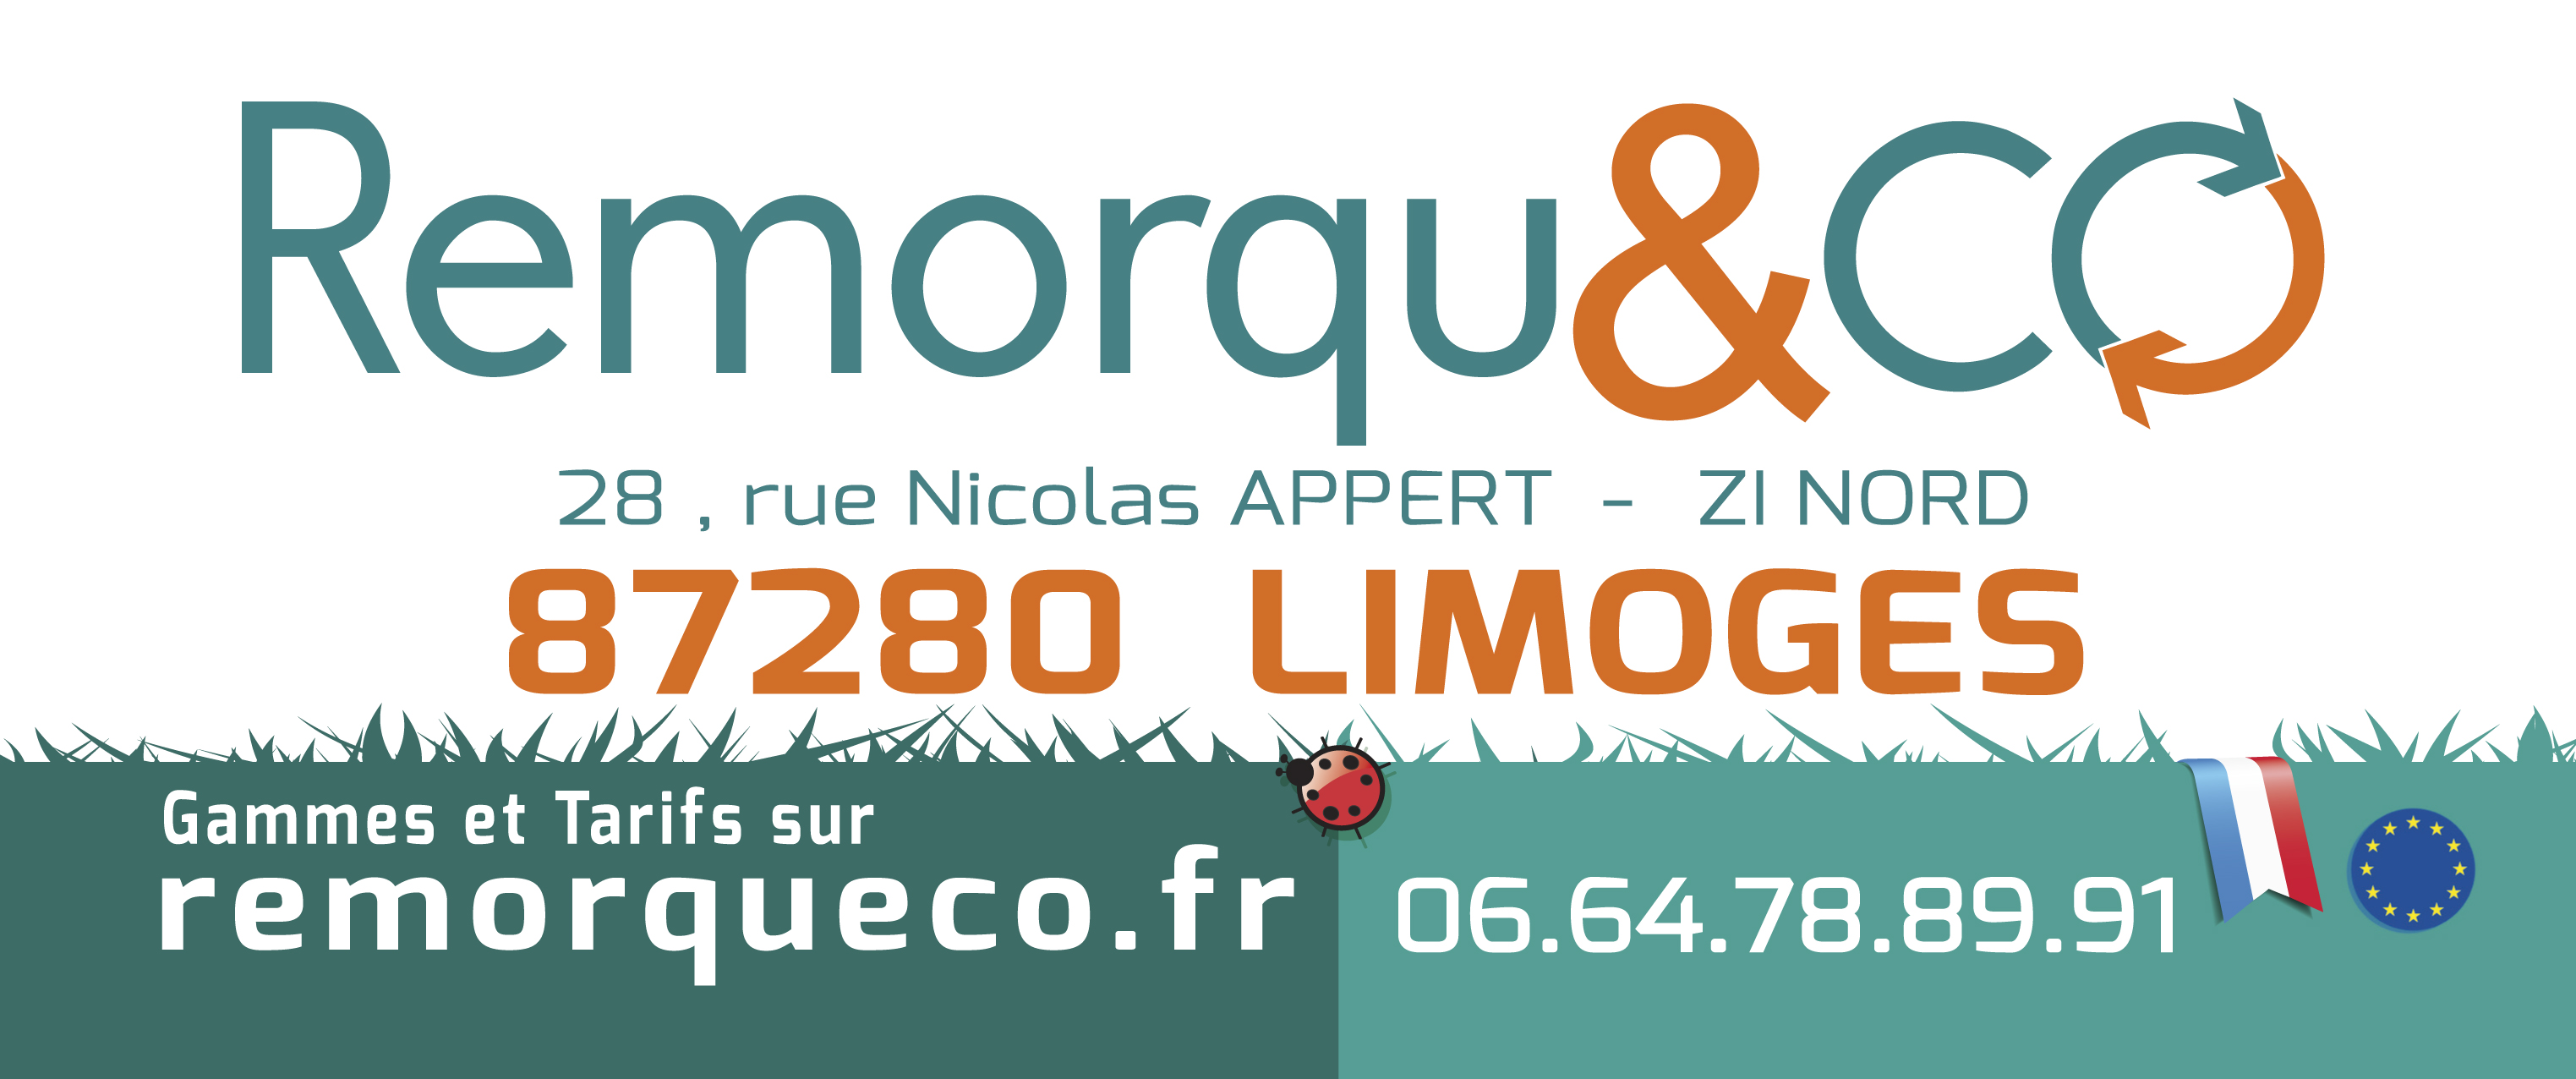 Remorqu&CO-Limoges